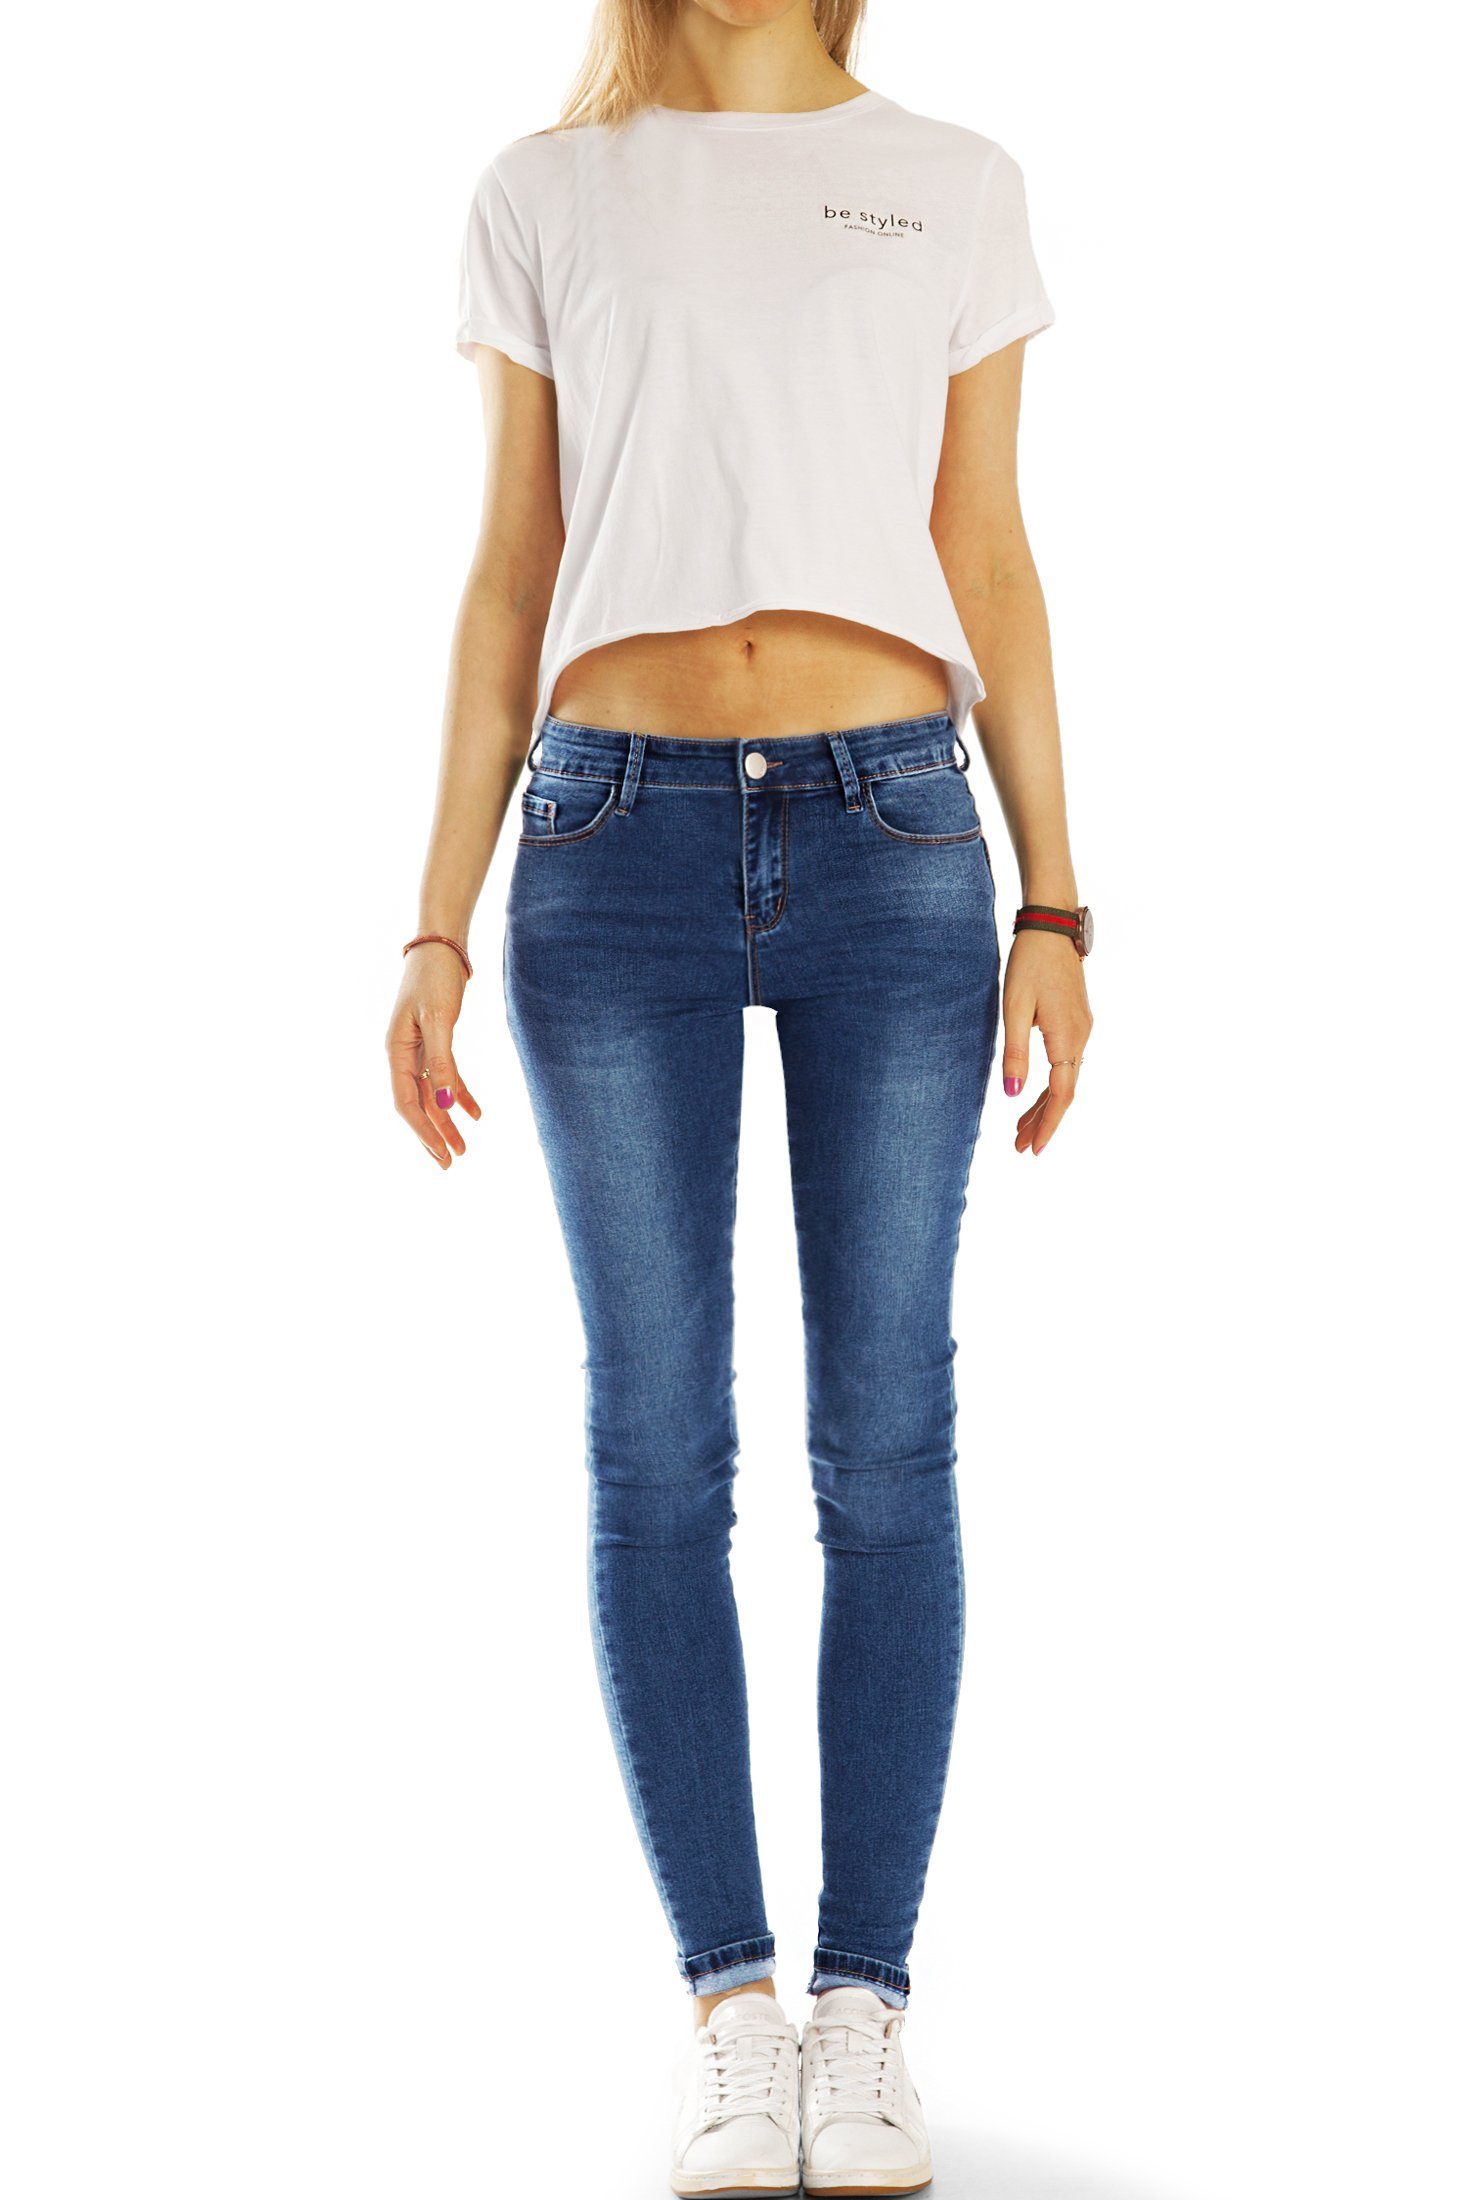 be waist Damenjeans styled Hosen medium stretch Skinny-fit-Jeans j49L regular